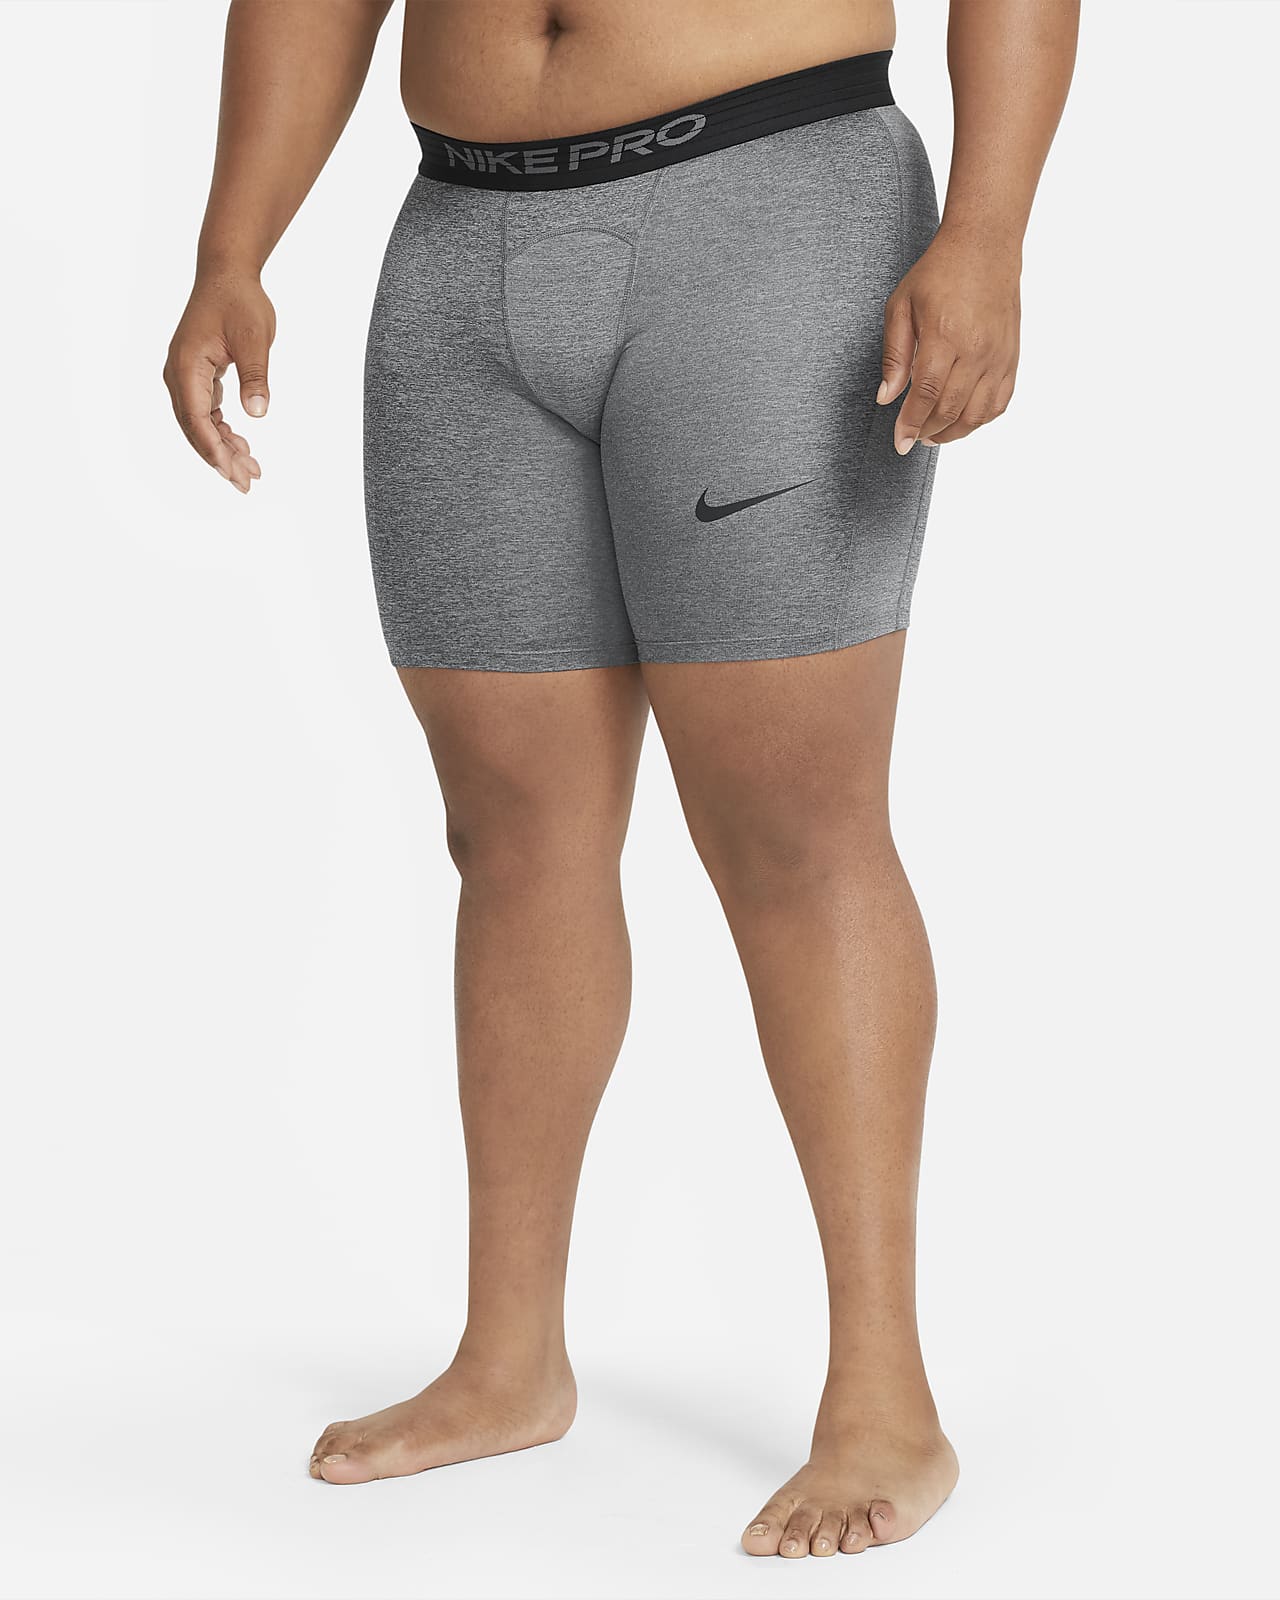 nike 7 inch compression shorts